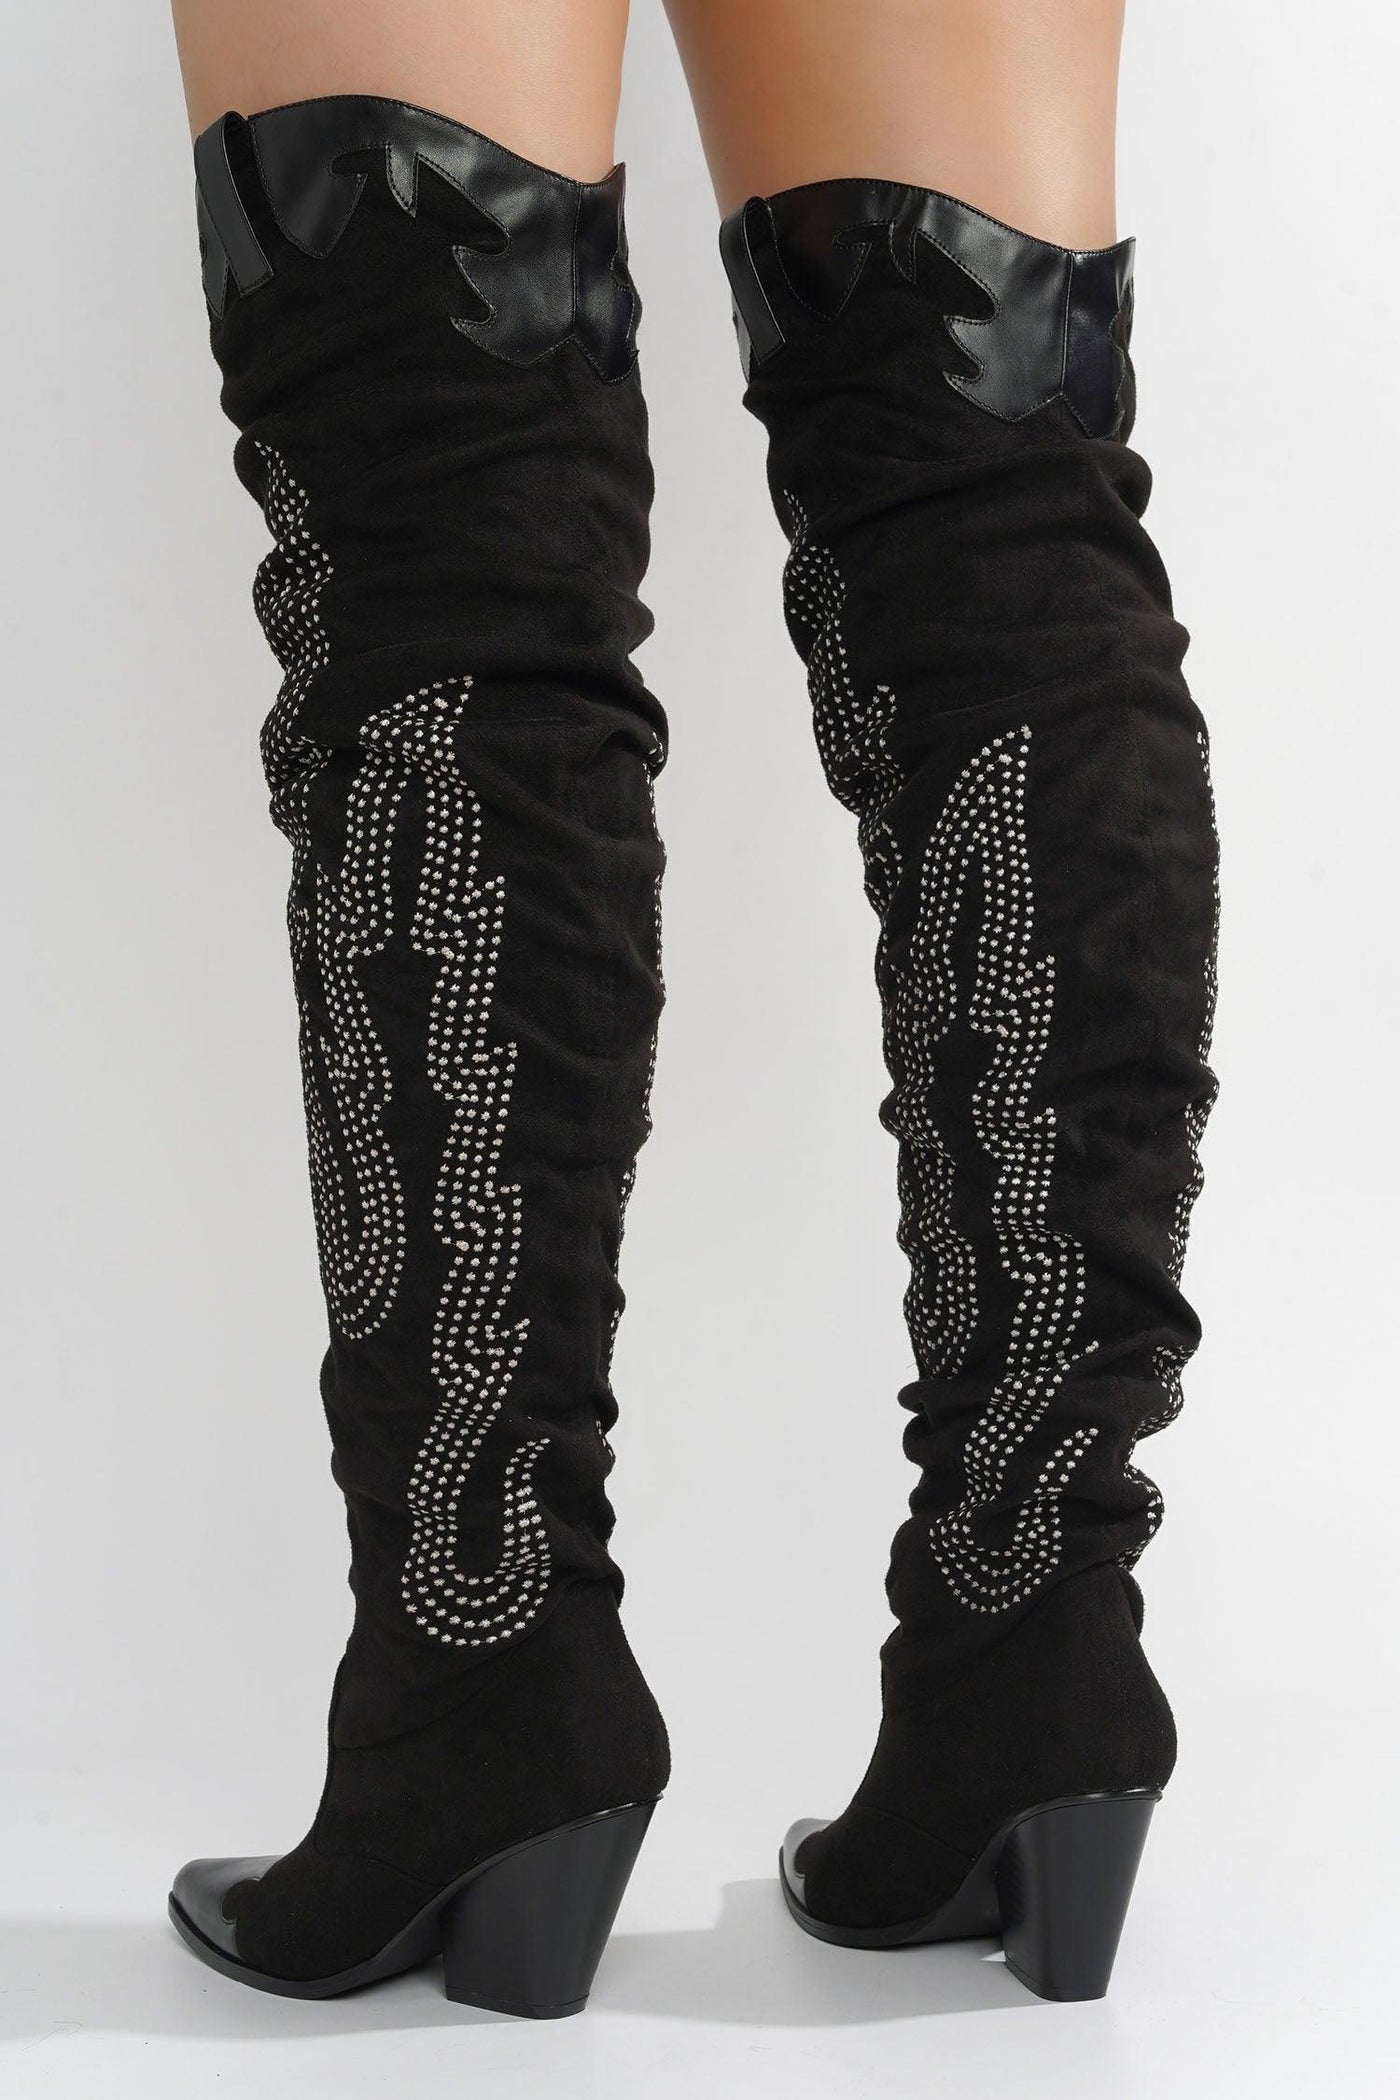 ICONA - BLACK Thigh High Boots - AMIClubwear